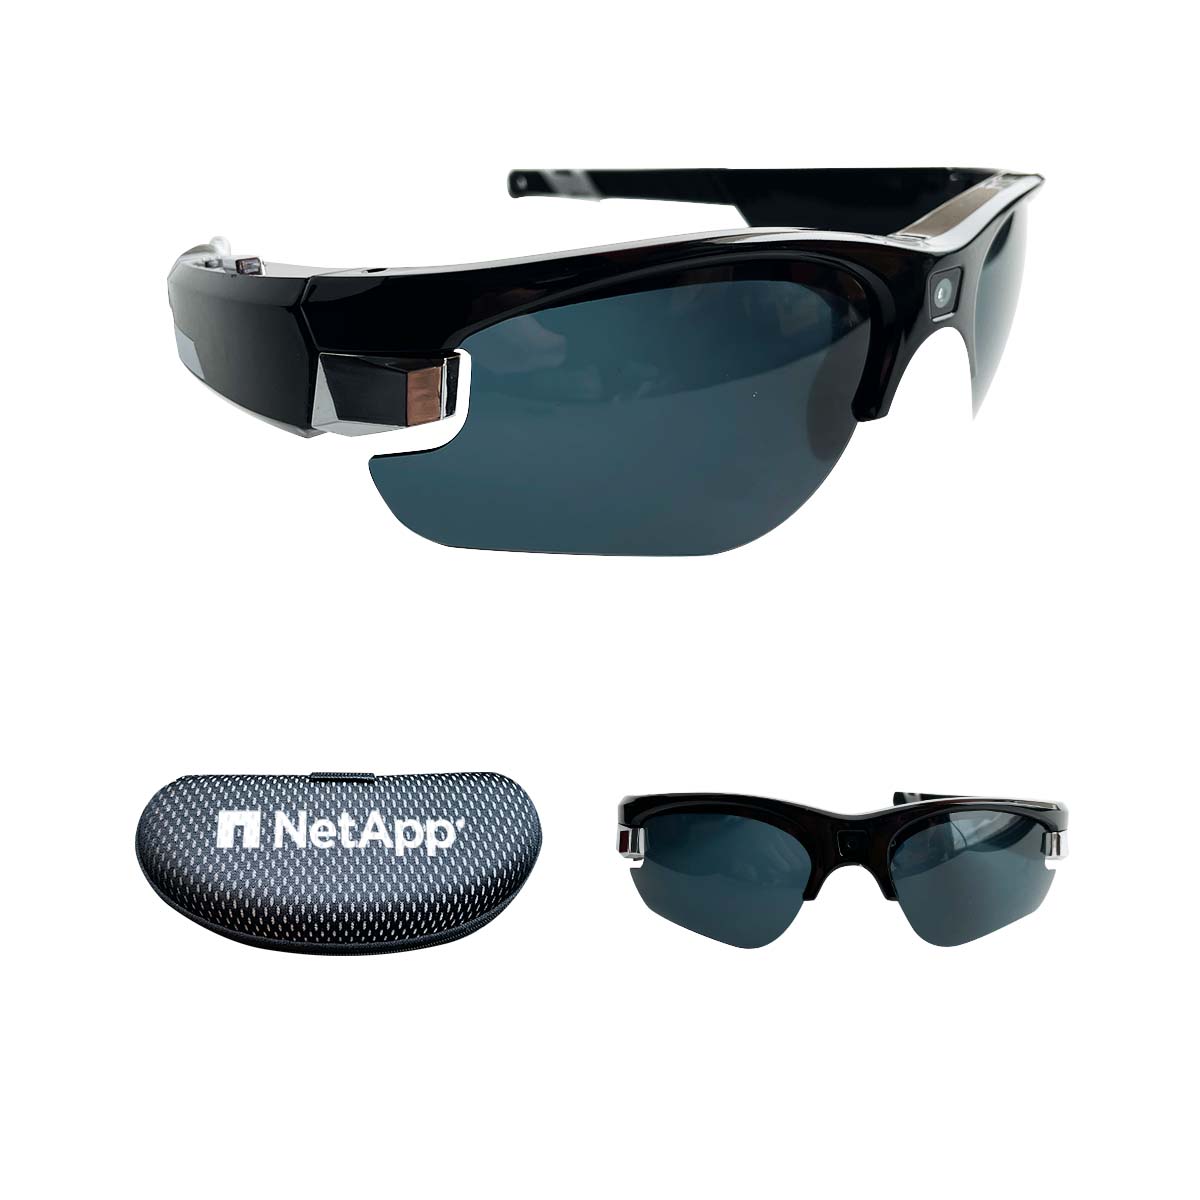 Sunglasses With HD Video Camera